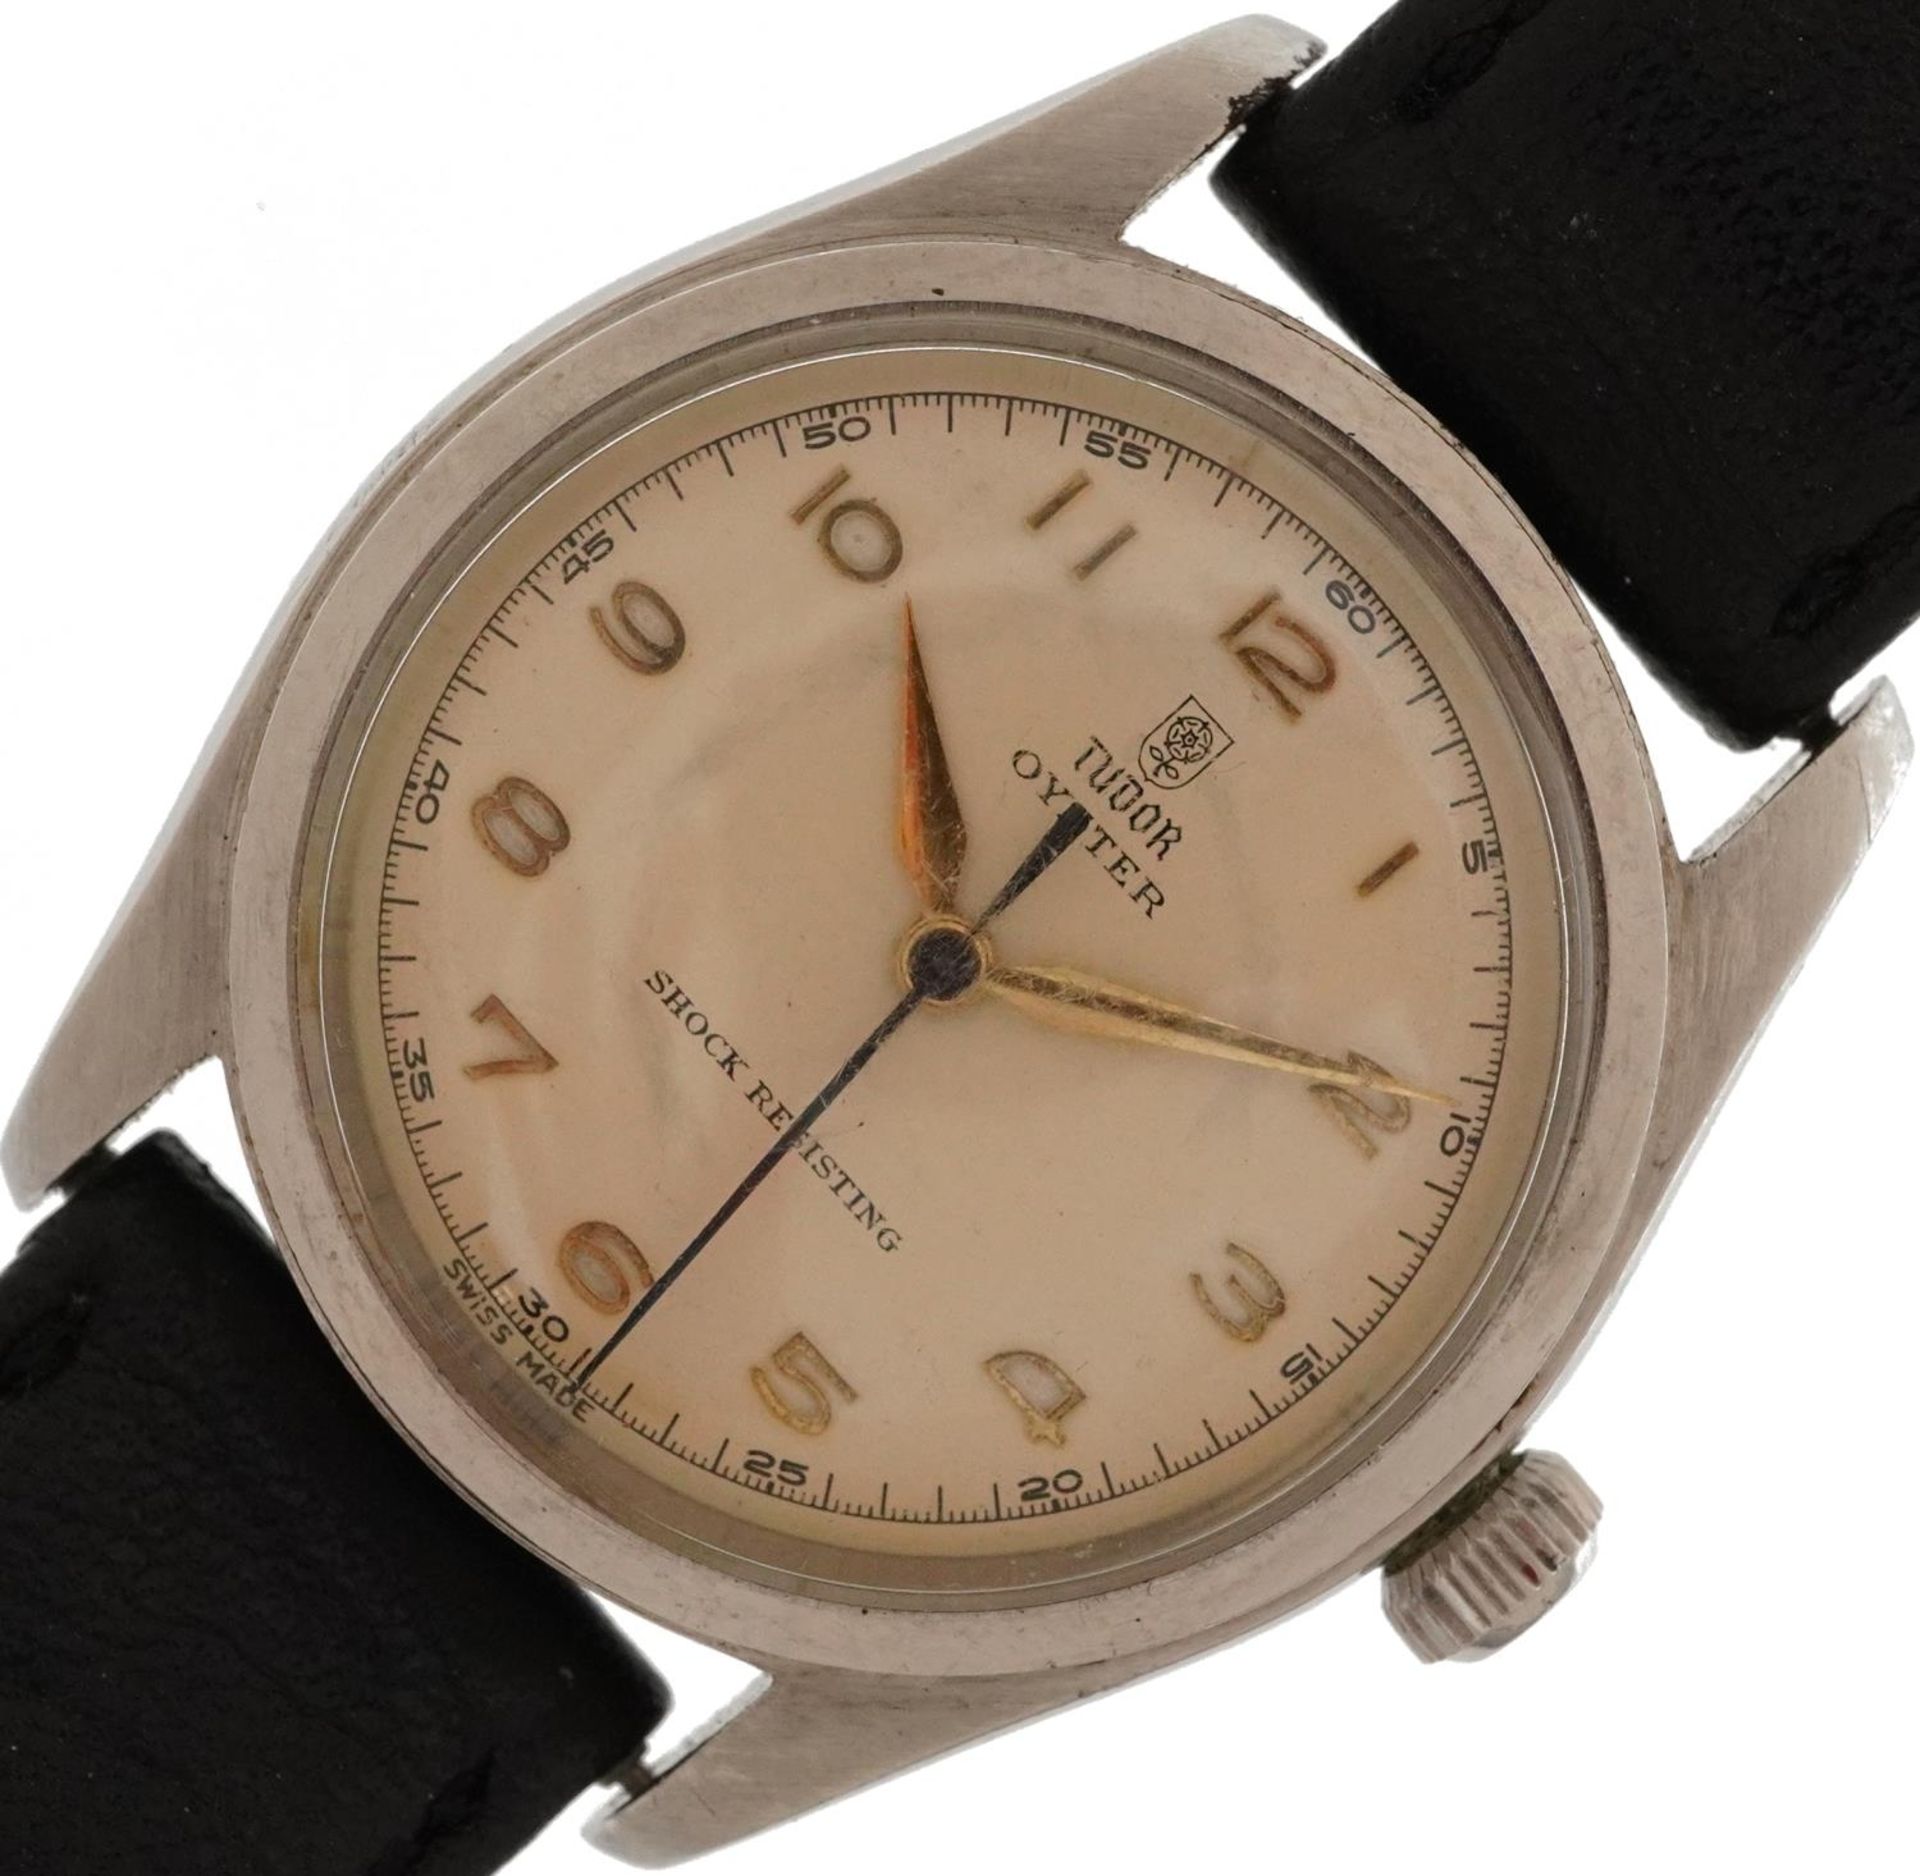 Tudor, gentlemen's stainless steel Tudor Oyster wristwatch, 33mm in diameter : For further